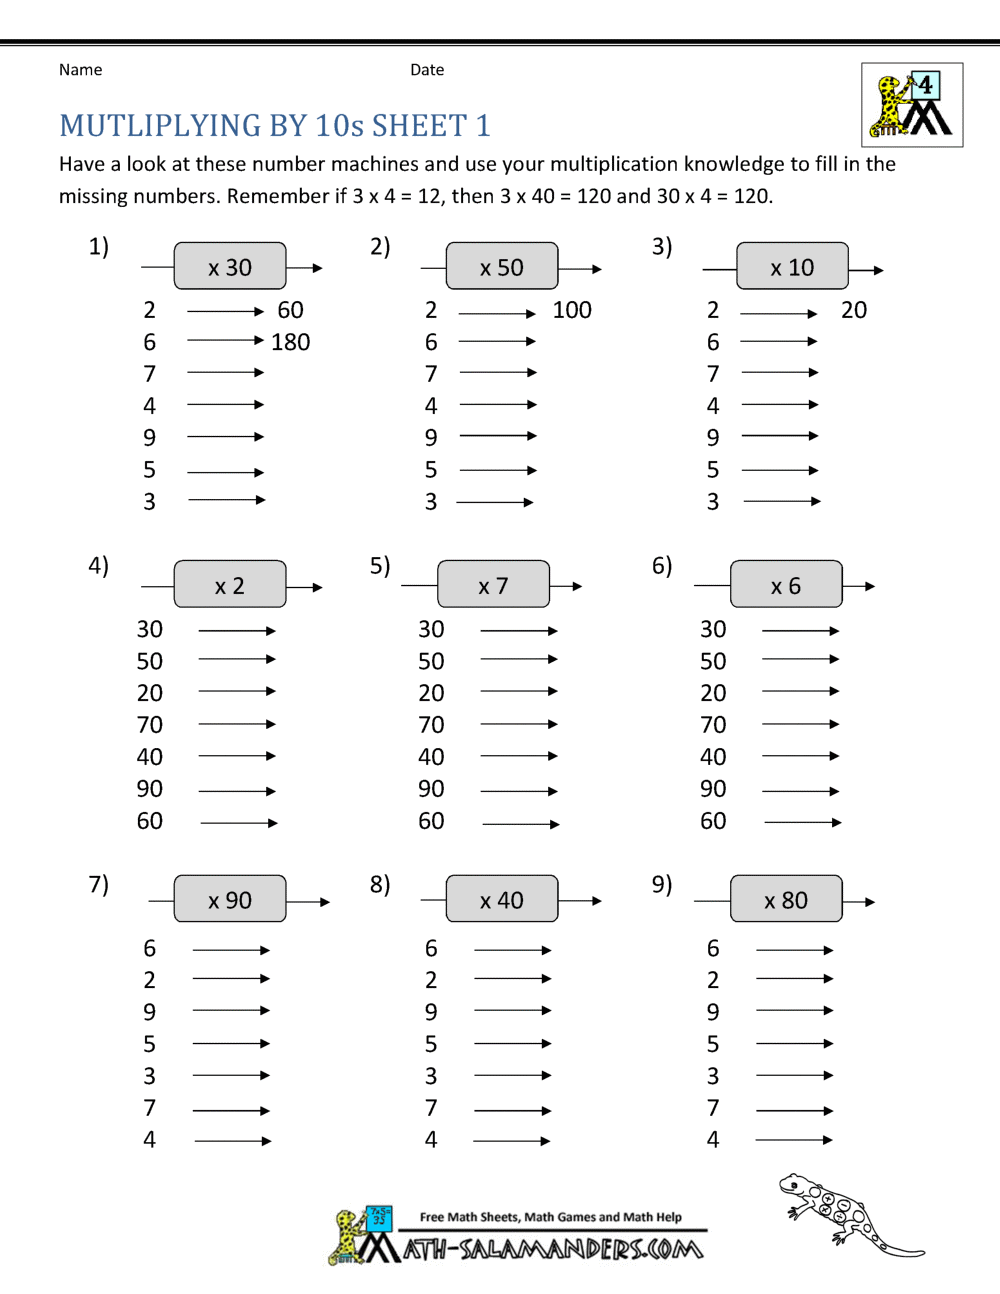 multiplication-fact-sheets